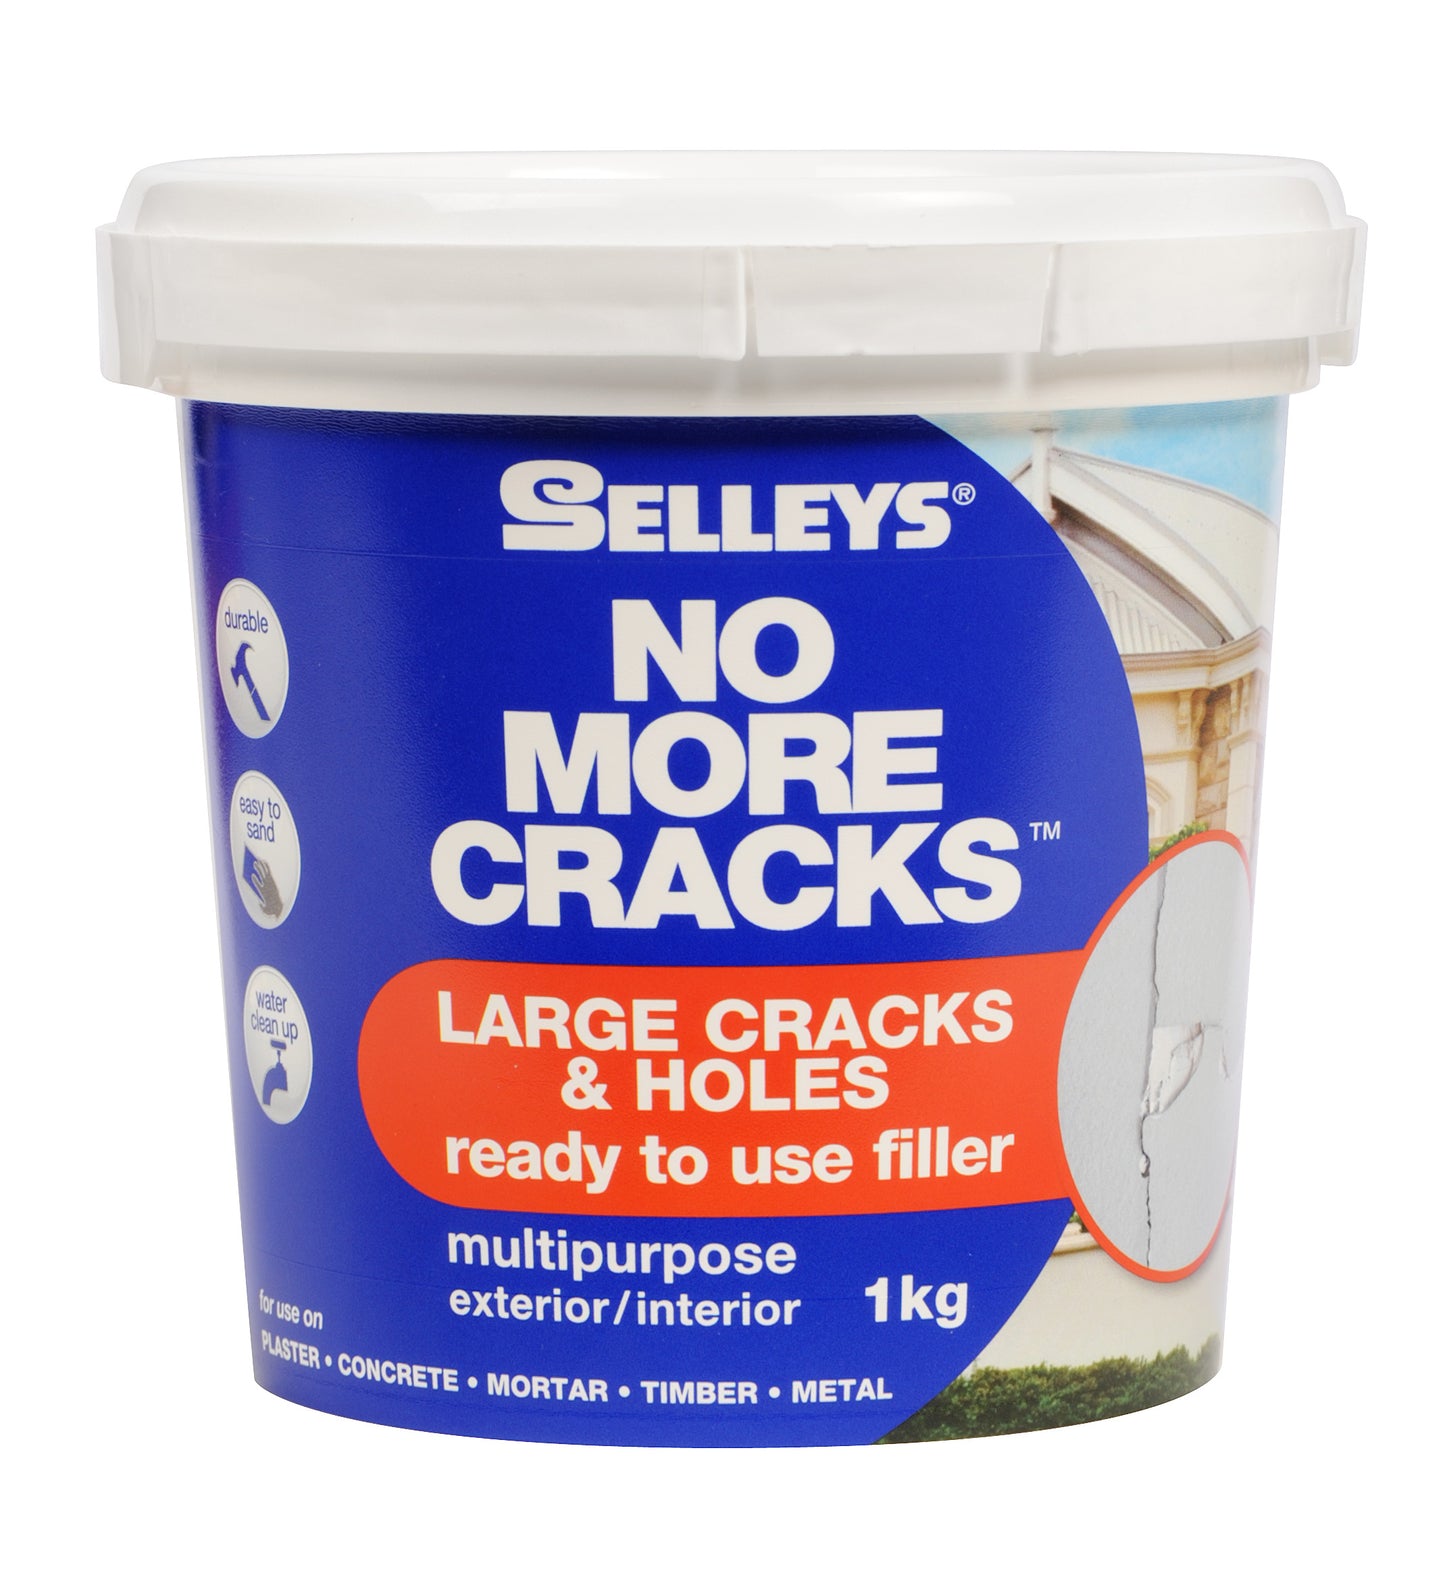 Selleys No More Cracks Large Cracks & Holes